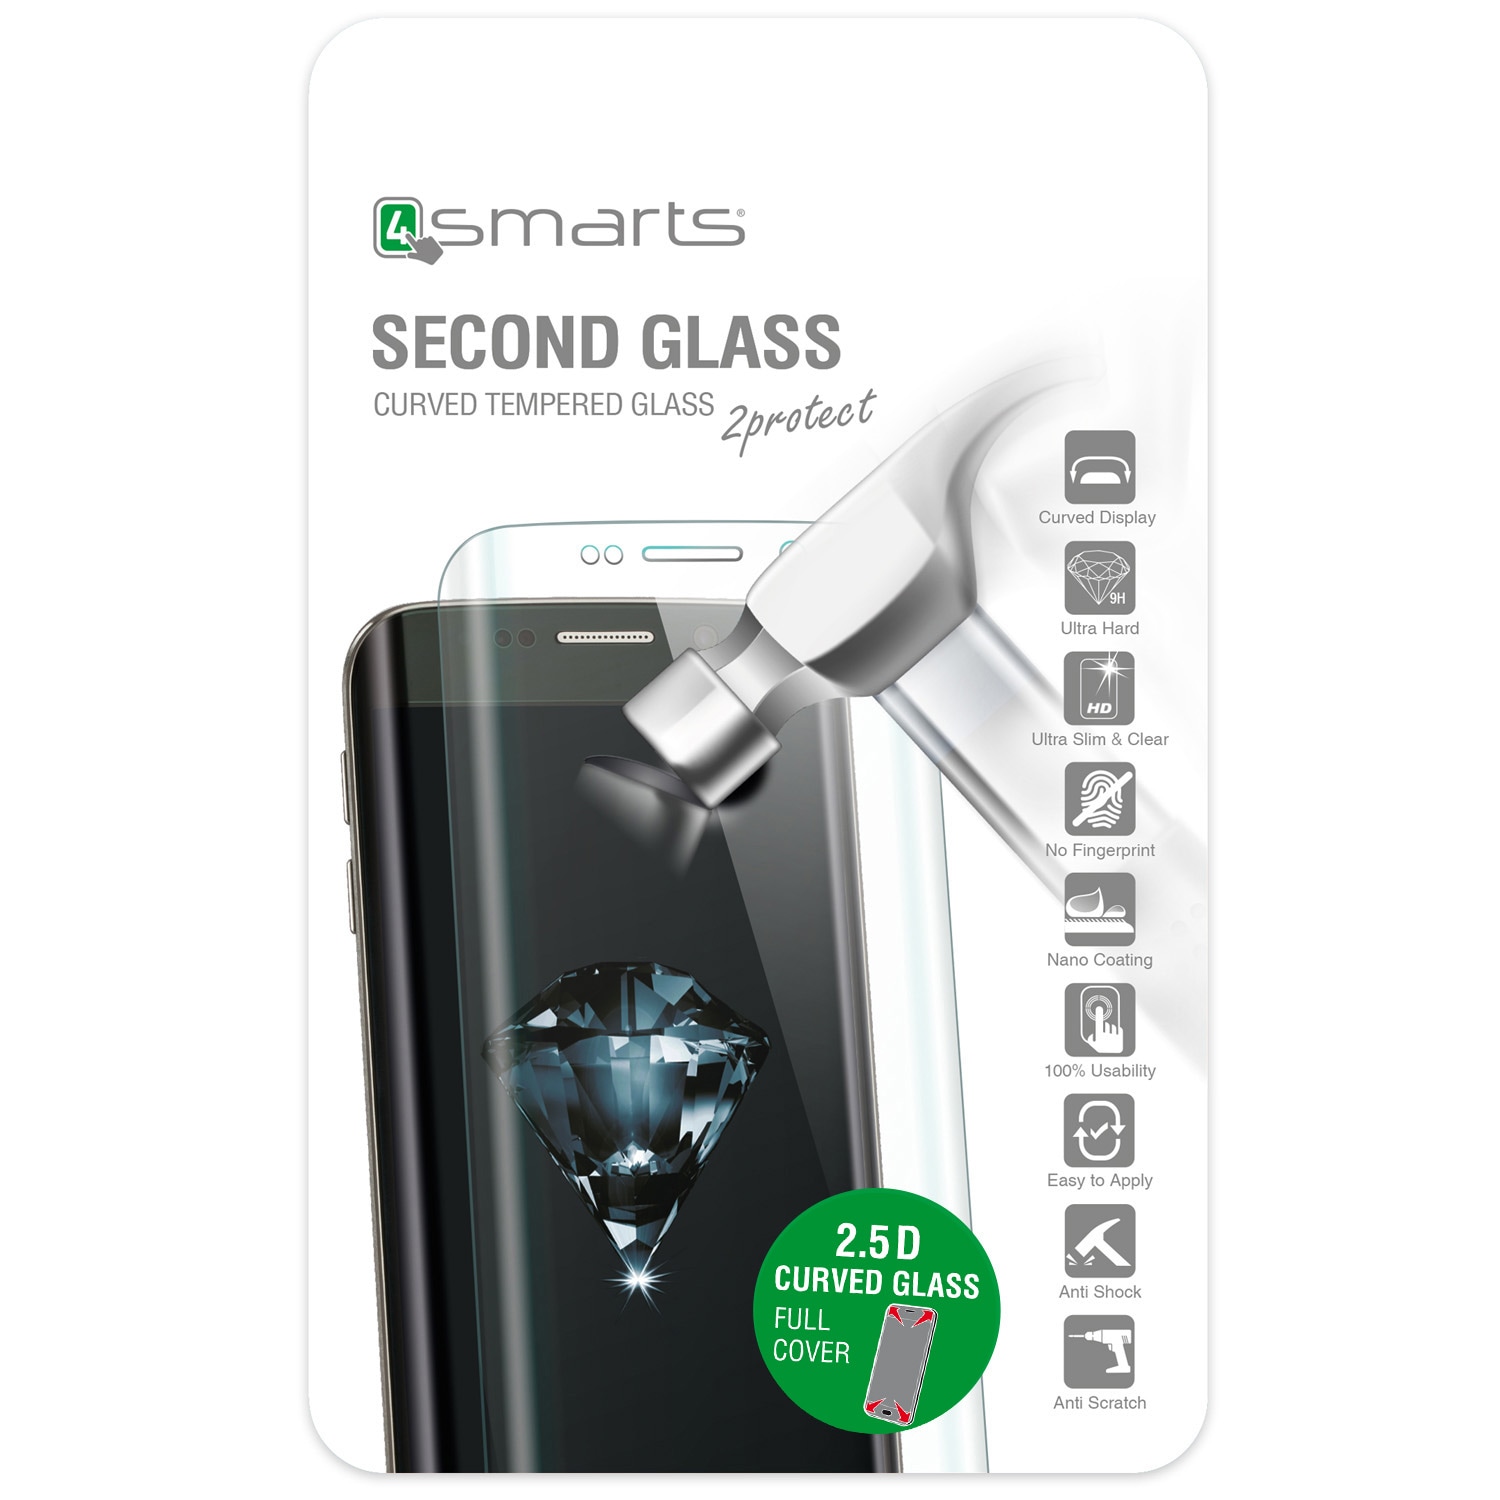 4smarts Second Glass Curved 2.5D til iPhone 8 Plus / 7 Plus -  Sølv